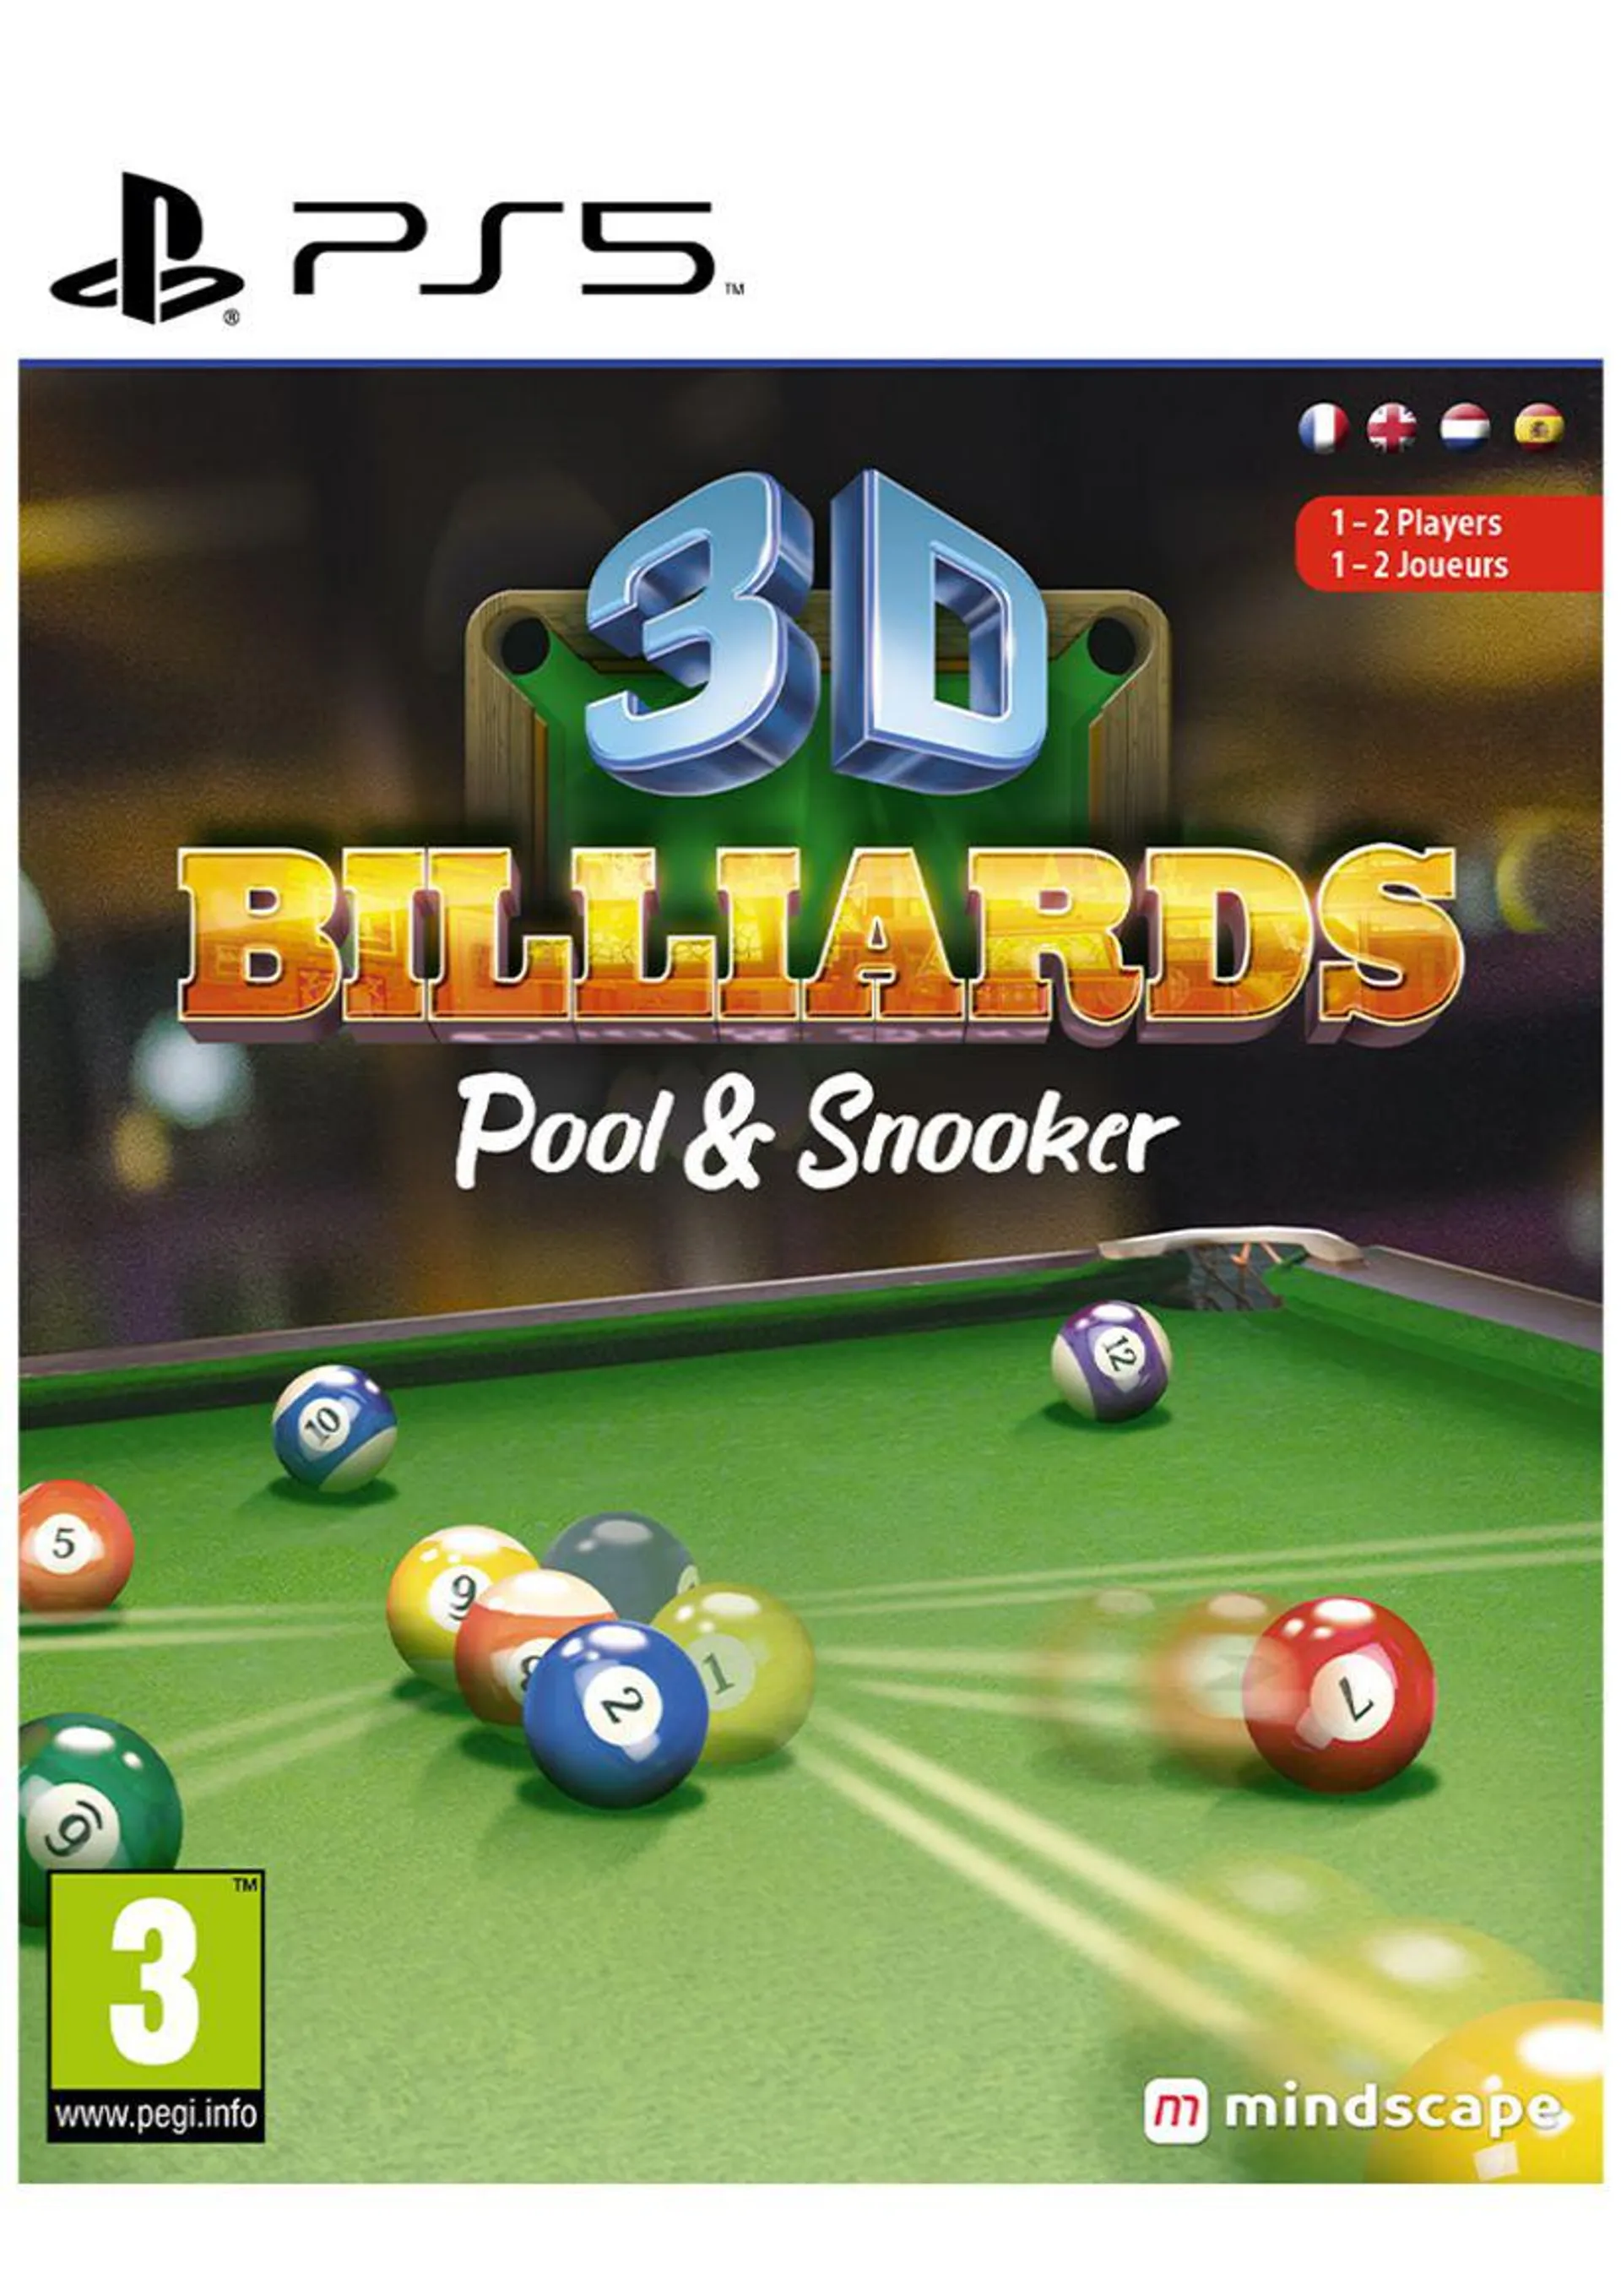 3D Billiards: Pool & Snooker on PlayStation 5